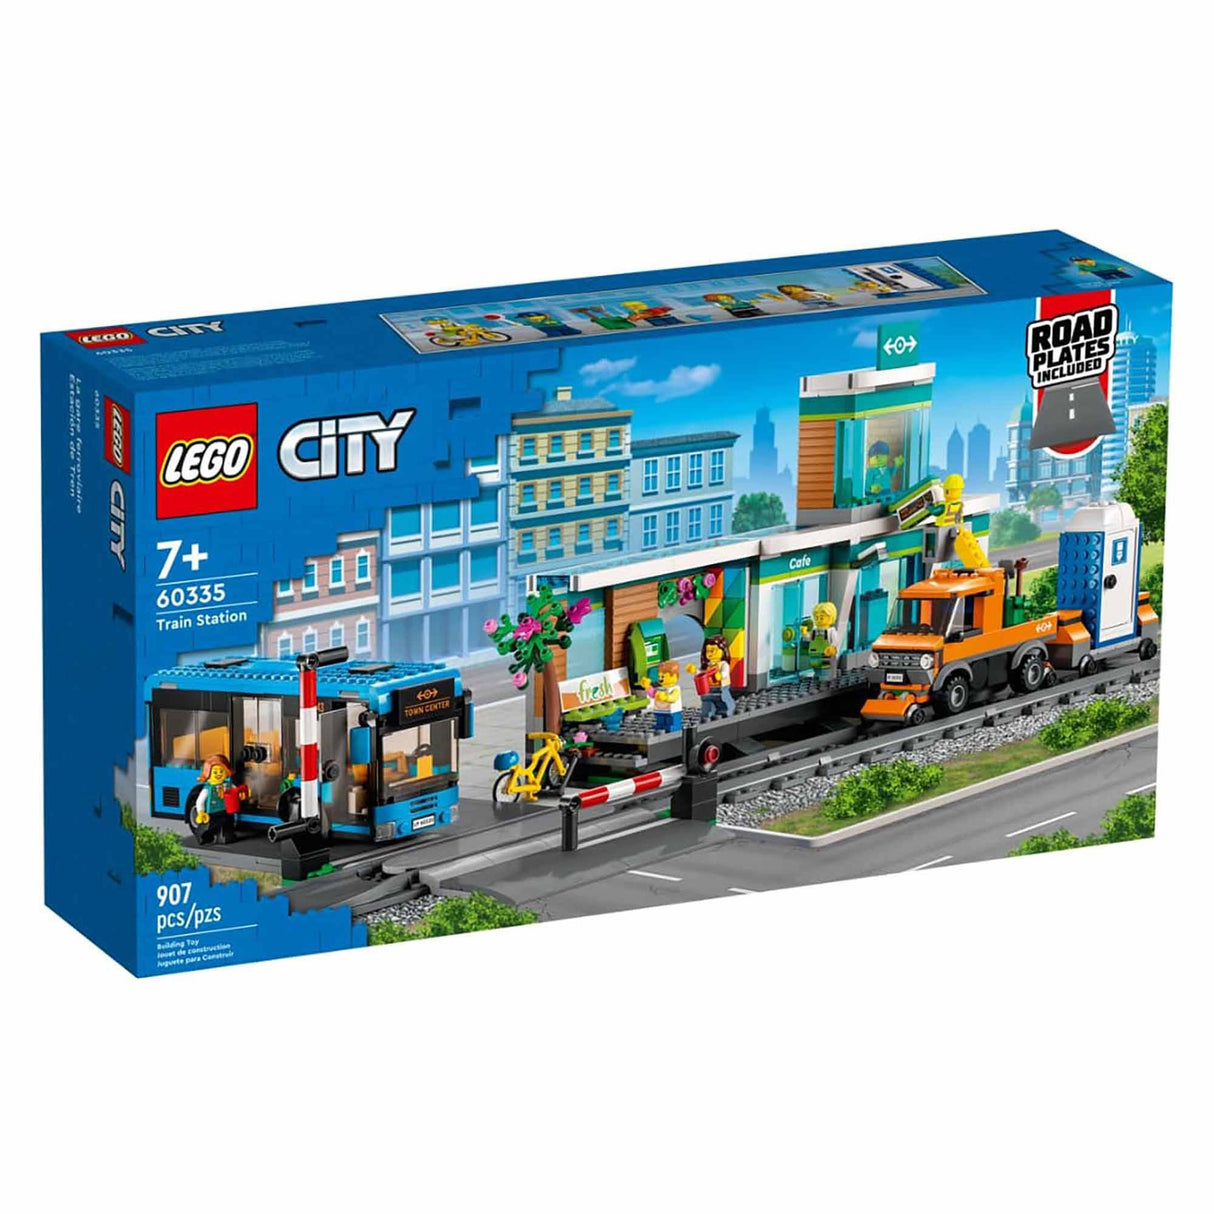 LEGO 60335 City Train Station (907 pieces)